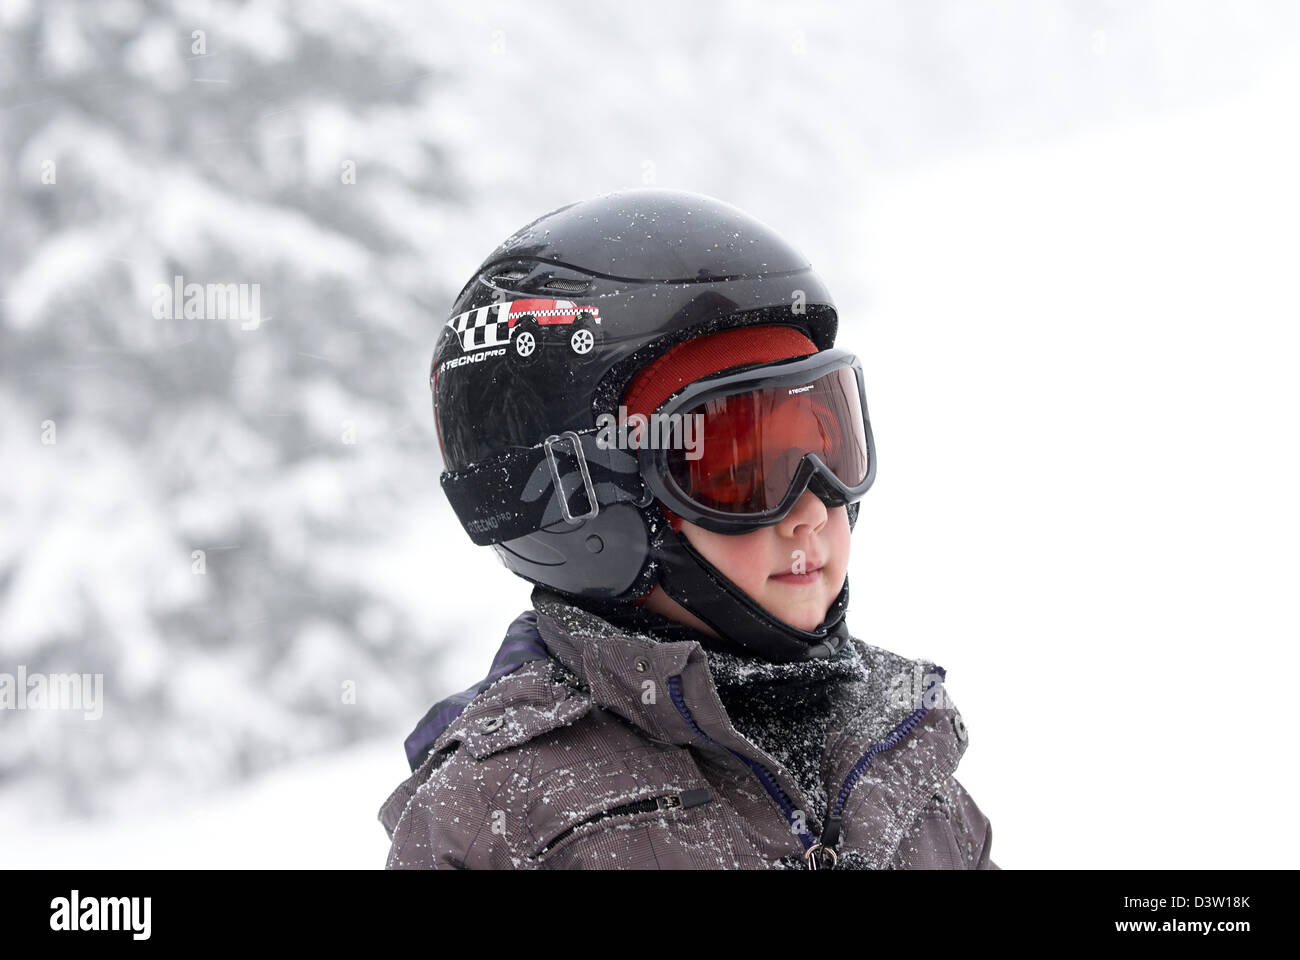 Young Child Boy in Ski Gear, portrait, winter season, snowing Stock Photo